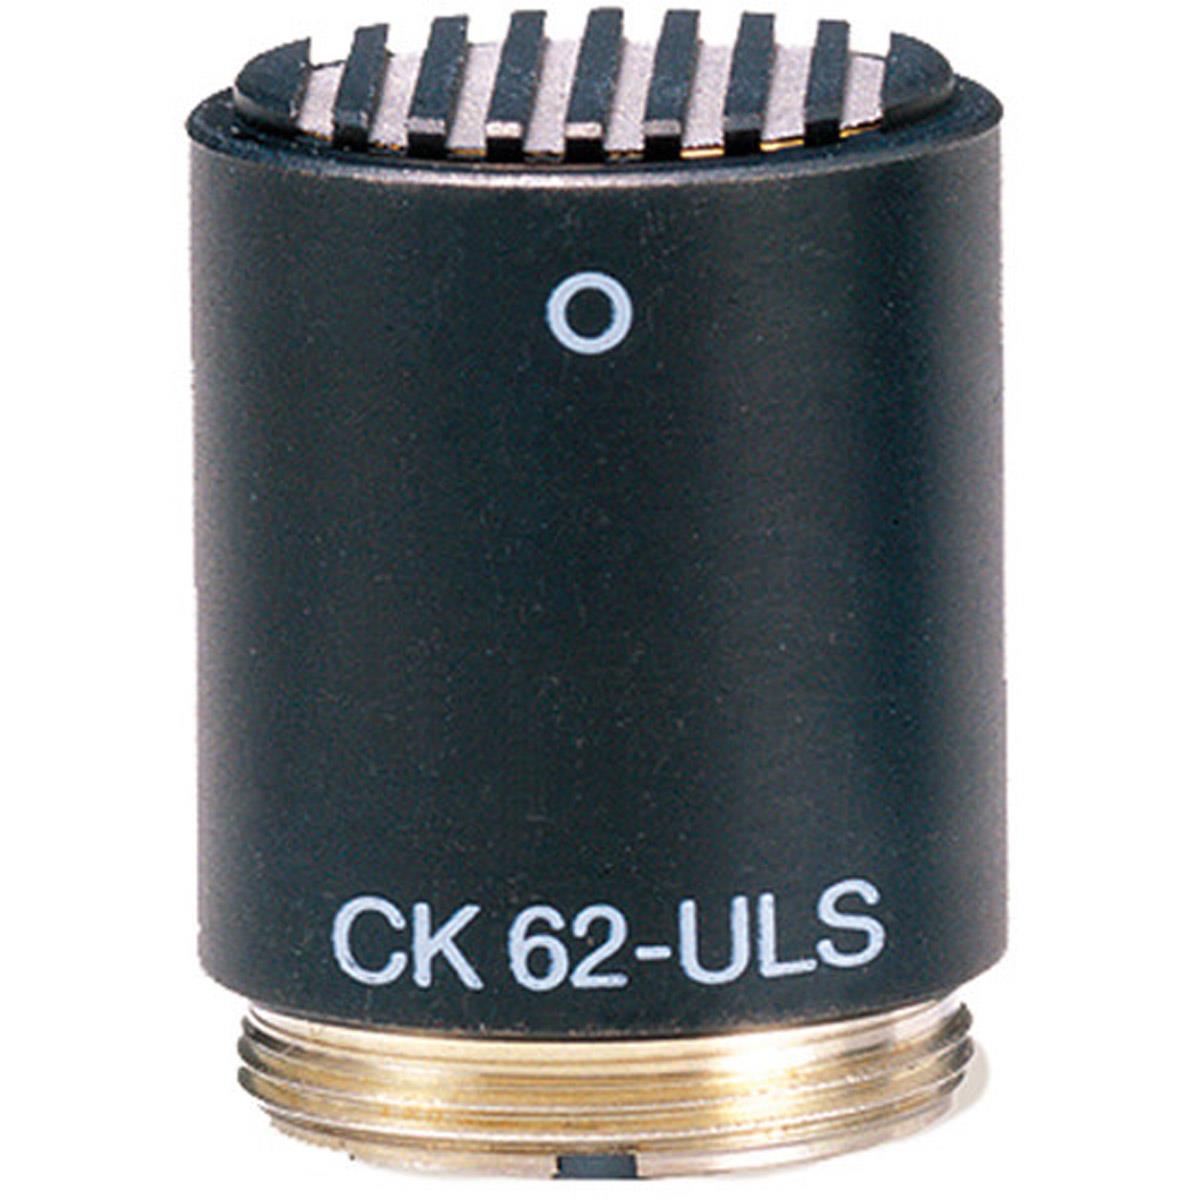 Image of AKG AKG CK 62-ULS High Quality Omni-Directional Microphone Capsule